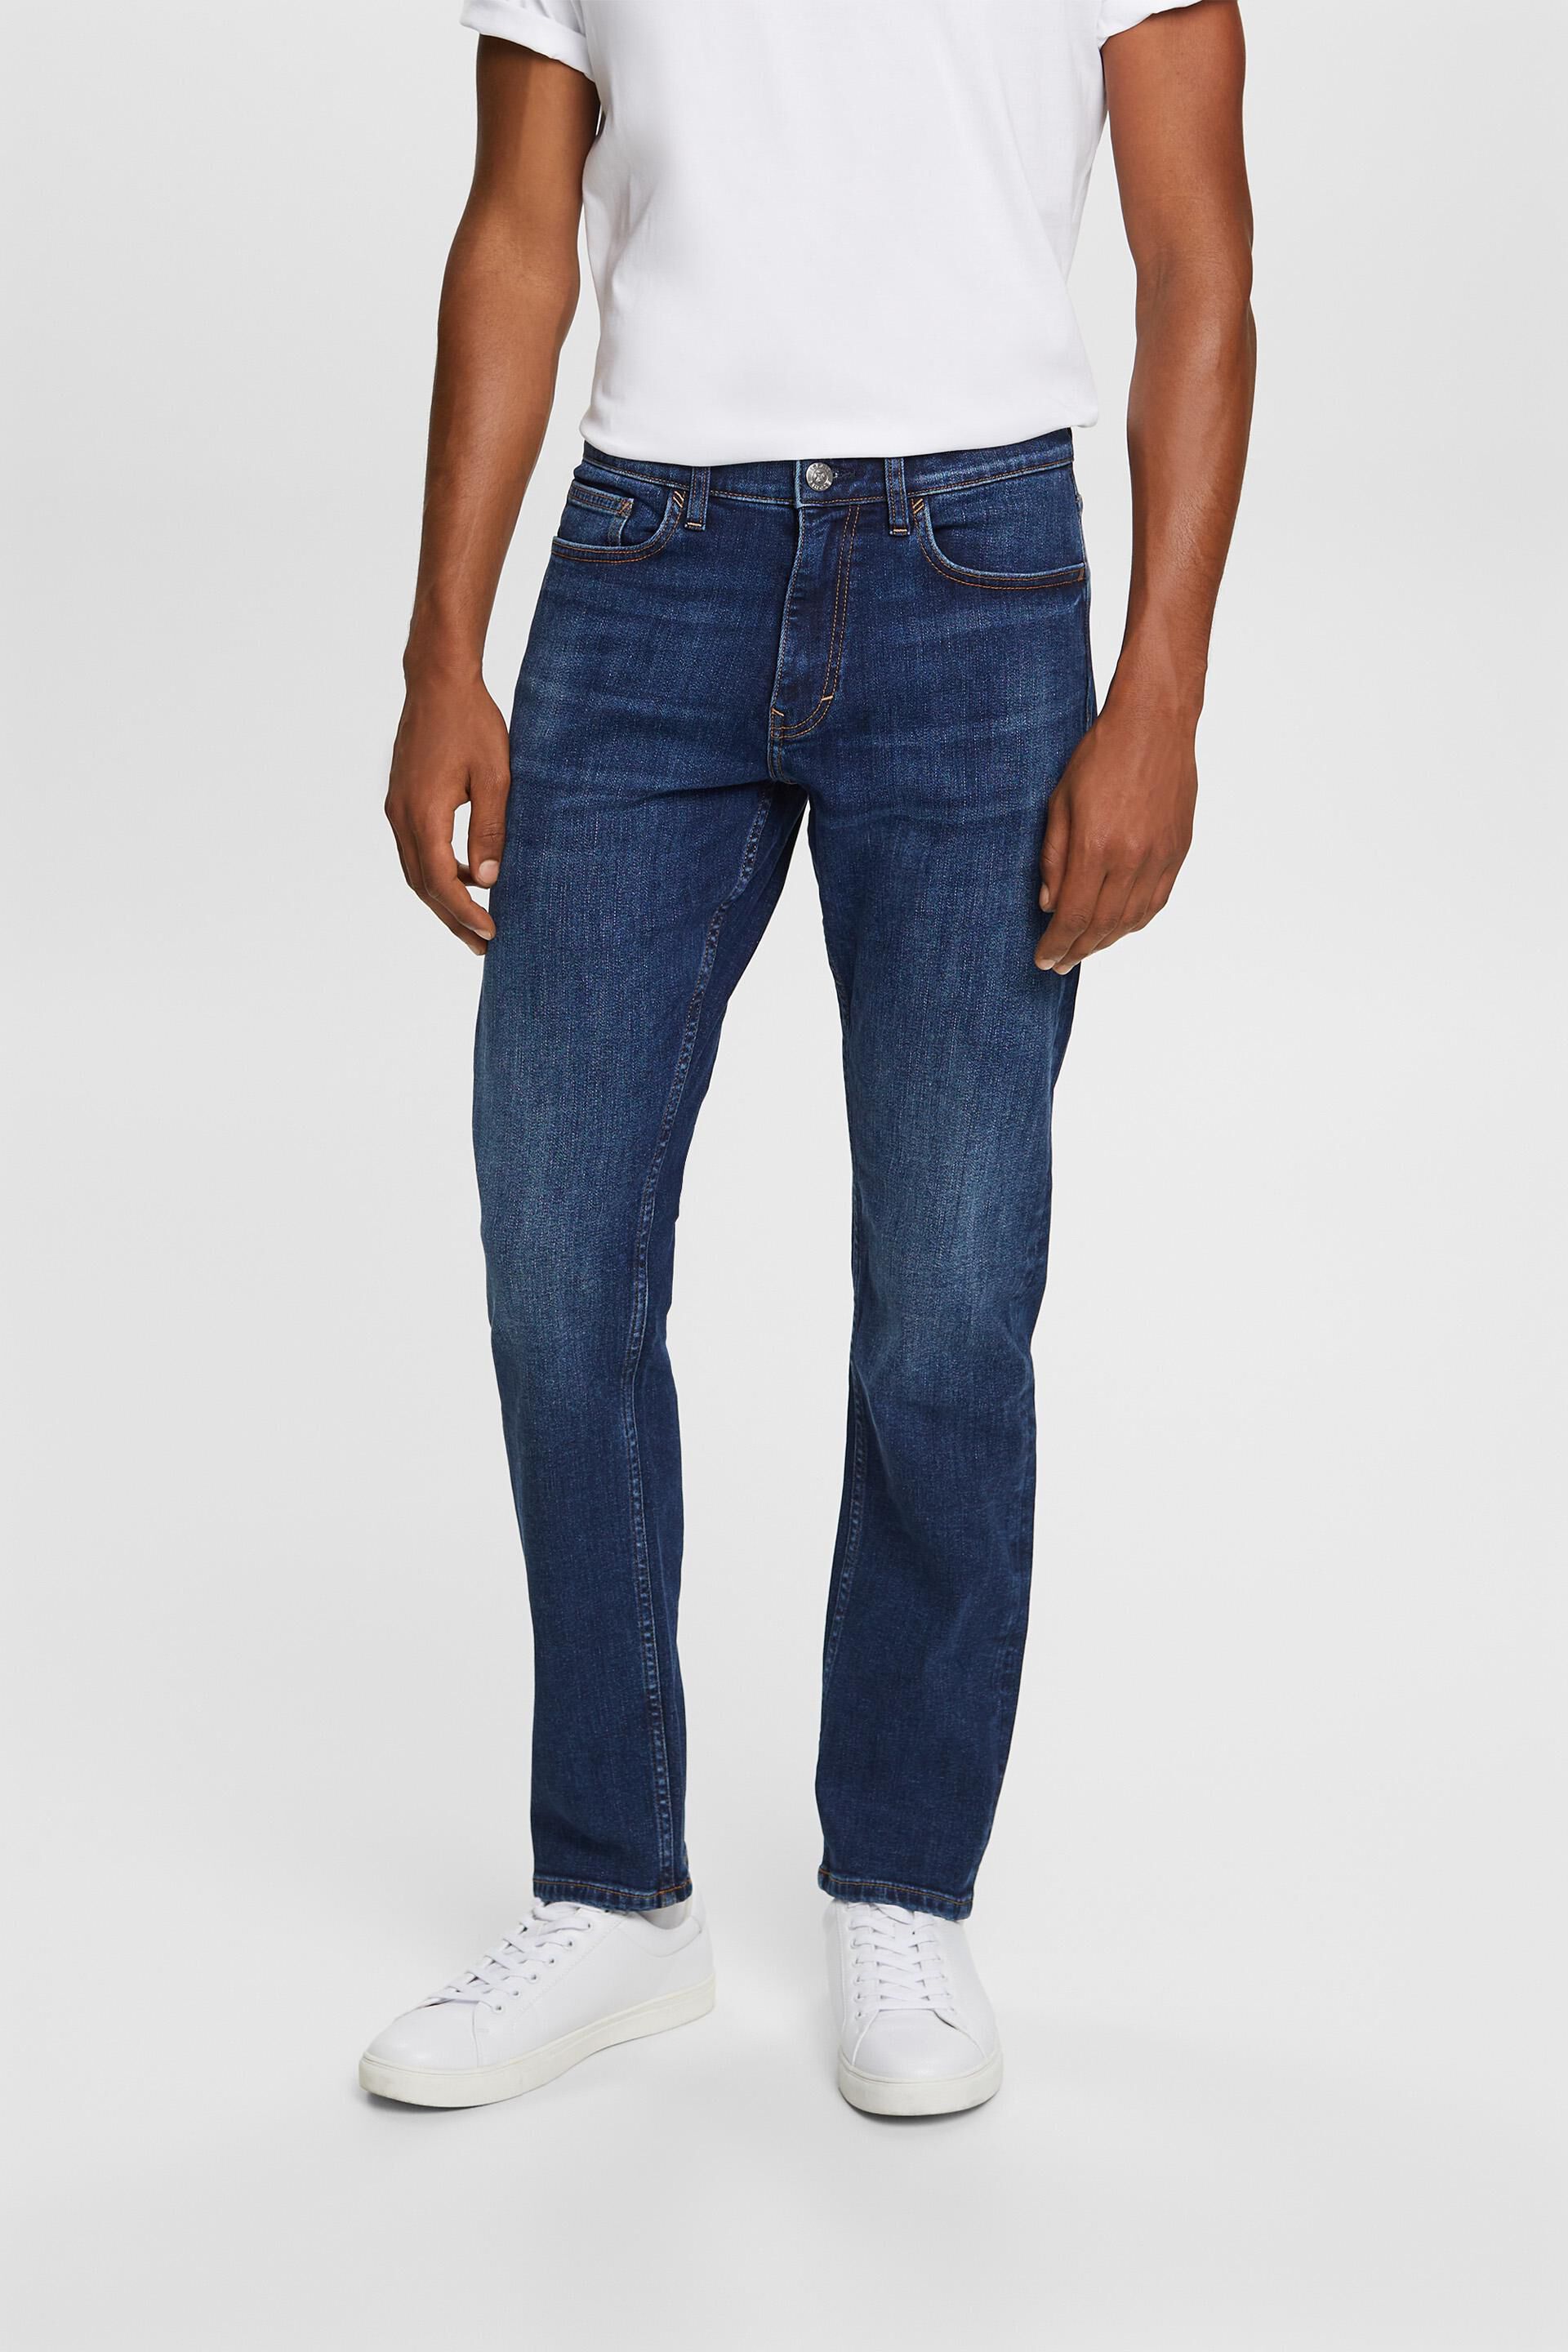 Esprit Slim fit stretch jeans